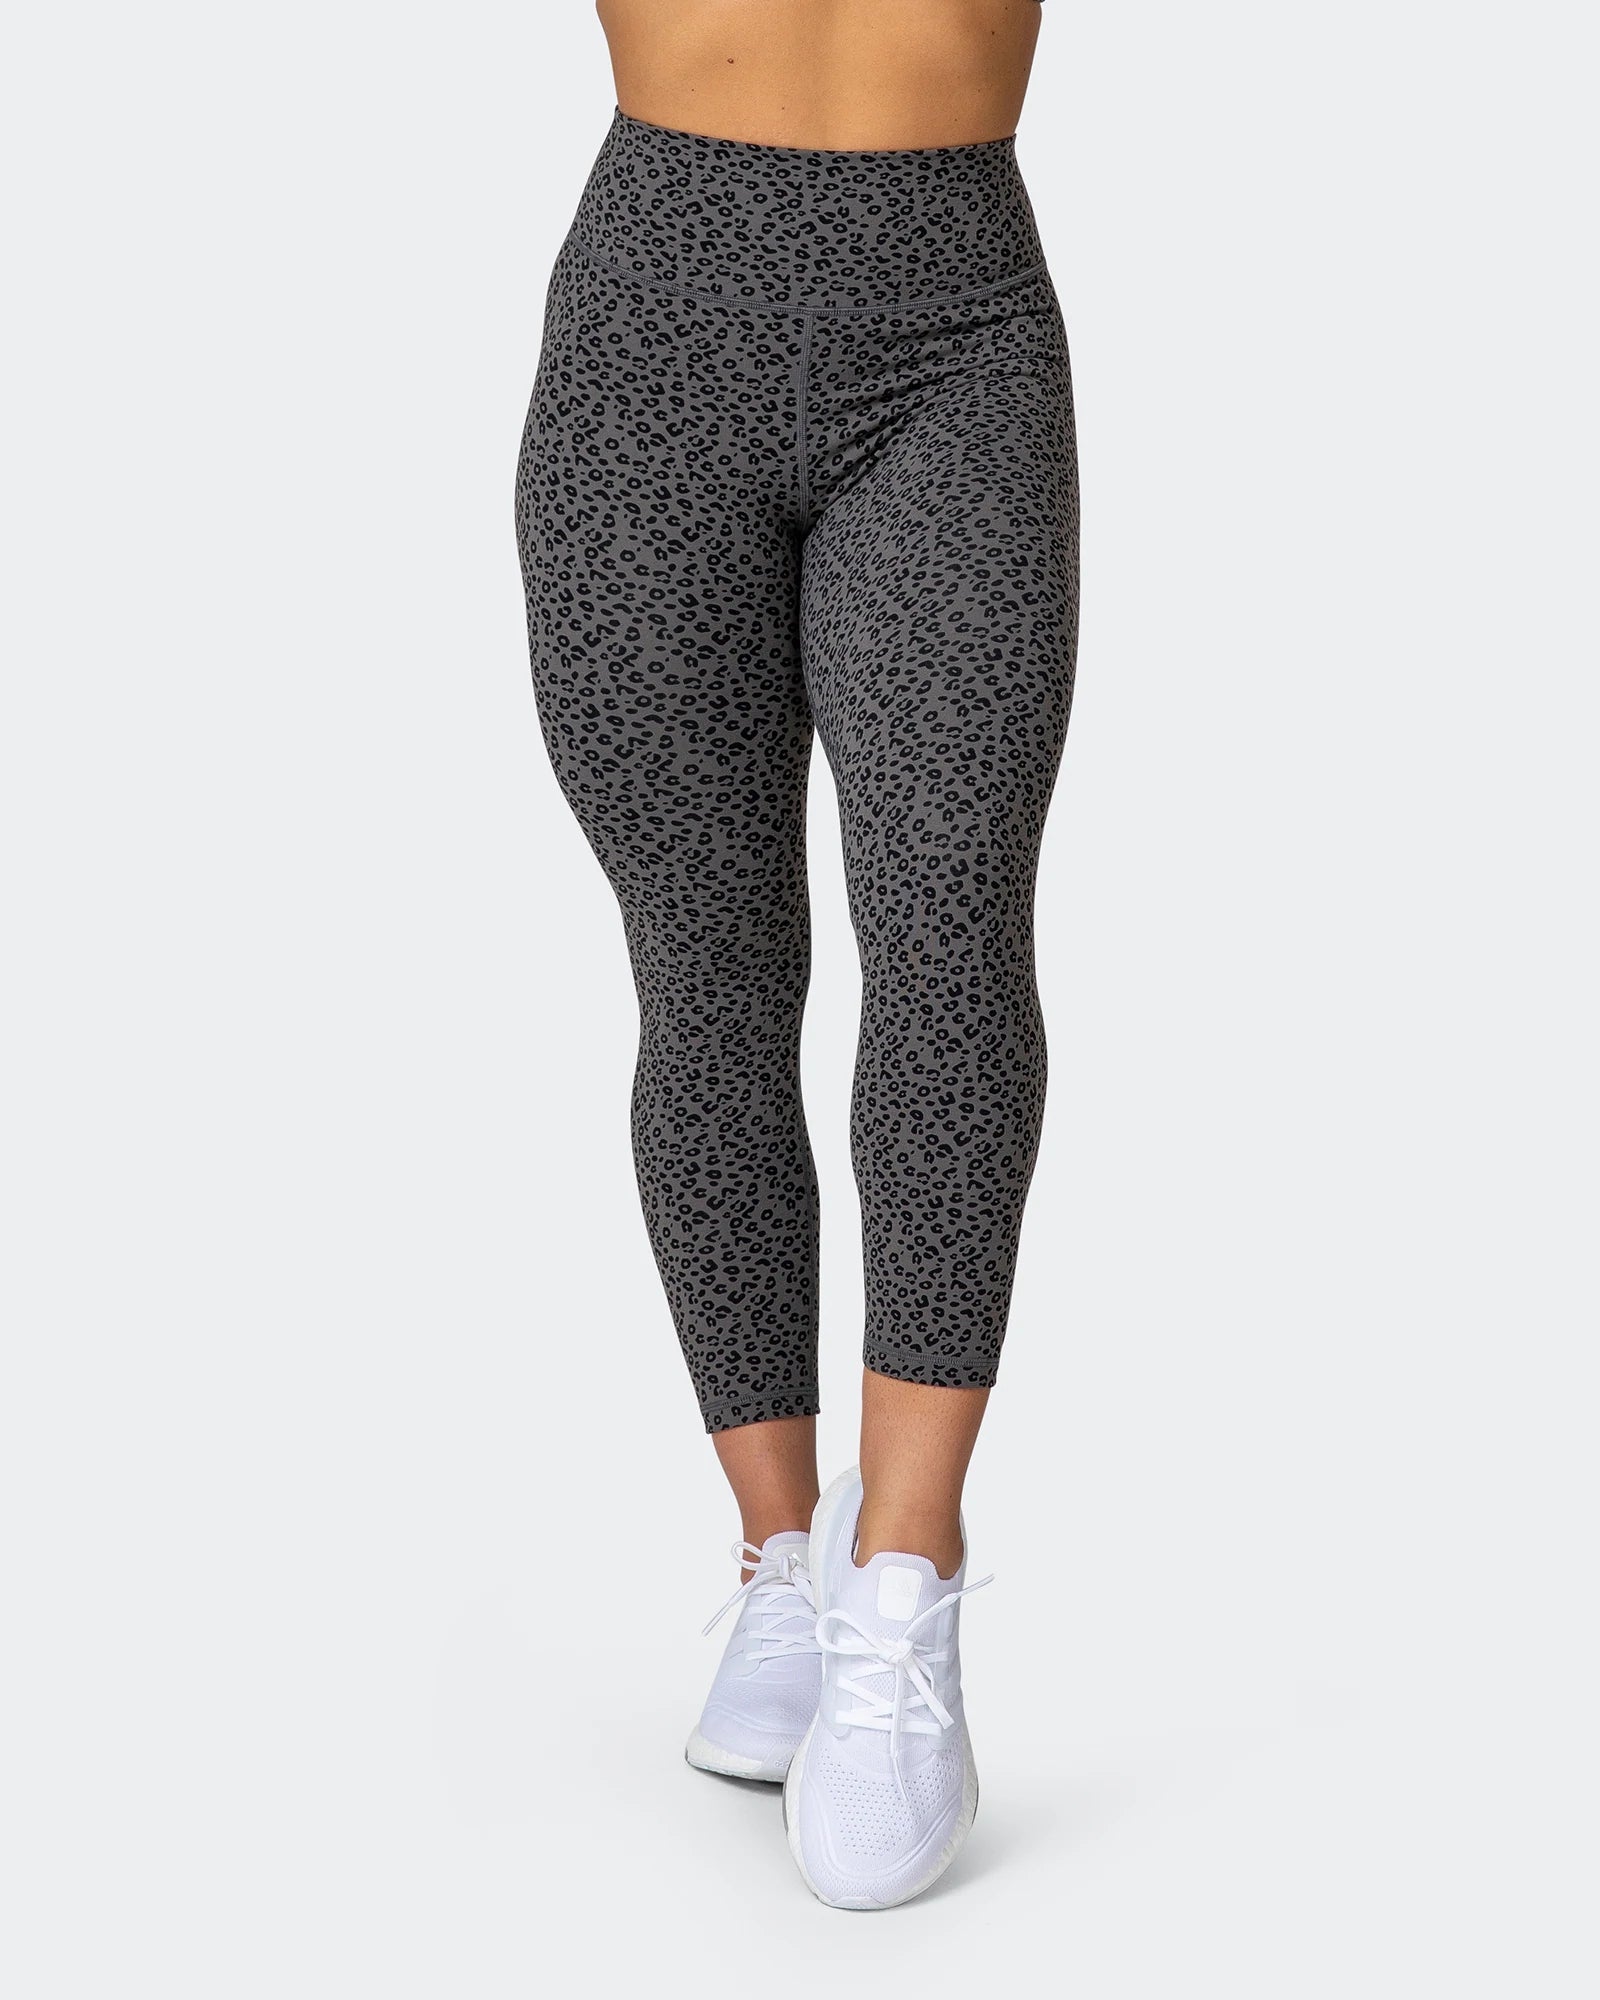 TEREZ Black cheetah Print Foil leggings activewear pants size XS | Active  wear leggings, Active wear pants, Terez